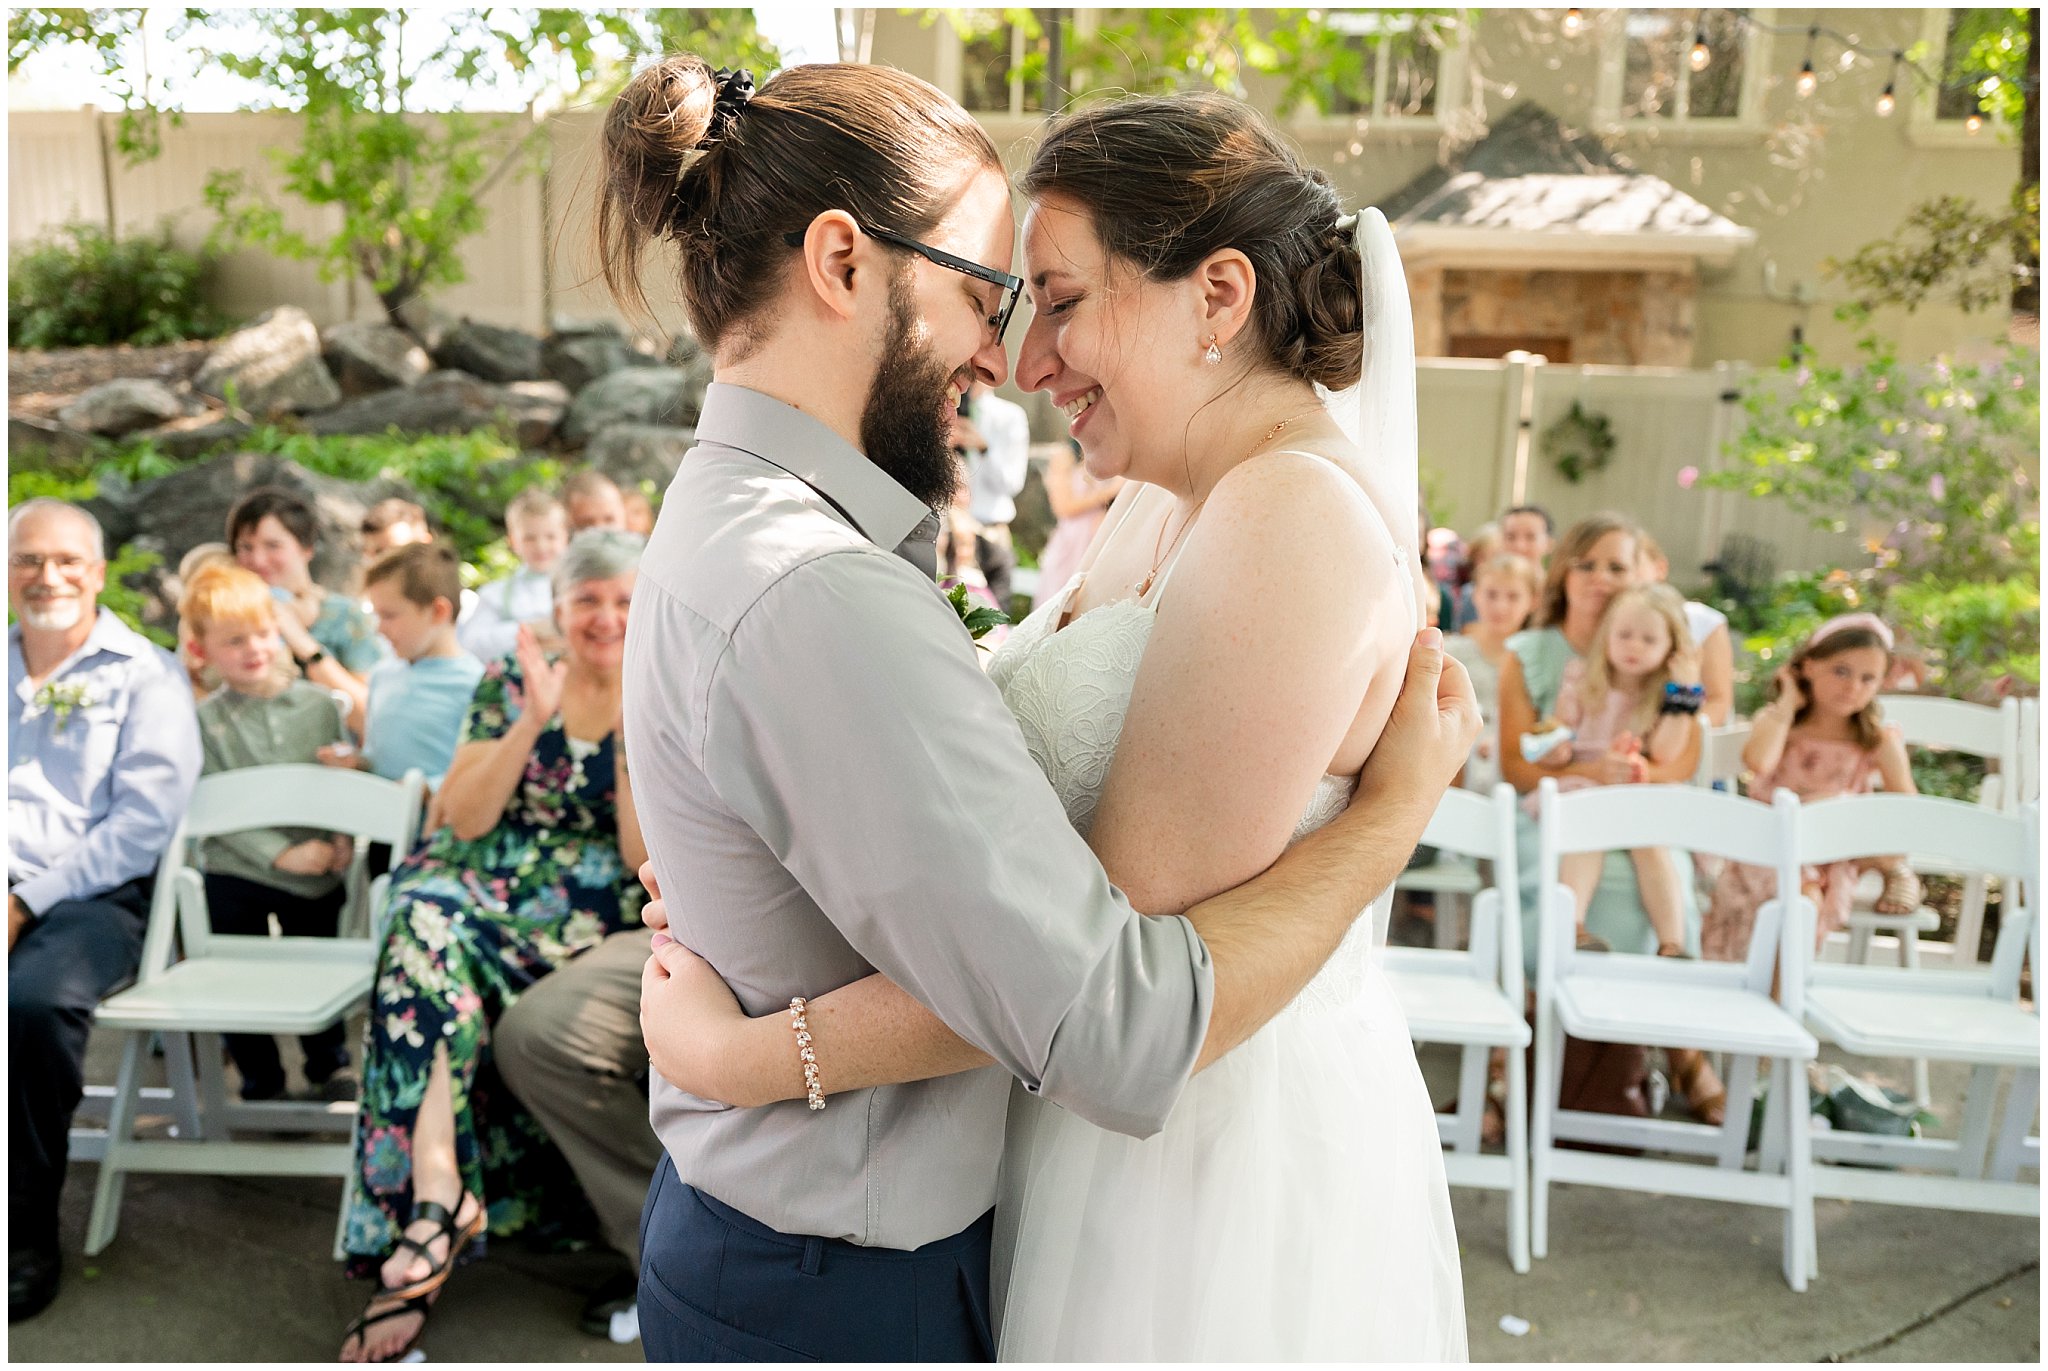 Garden wedding ceremony filled with emotion | Intimate Utah Summer Garden Wedding | Jessie and Dallin Photography